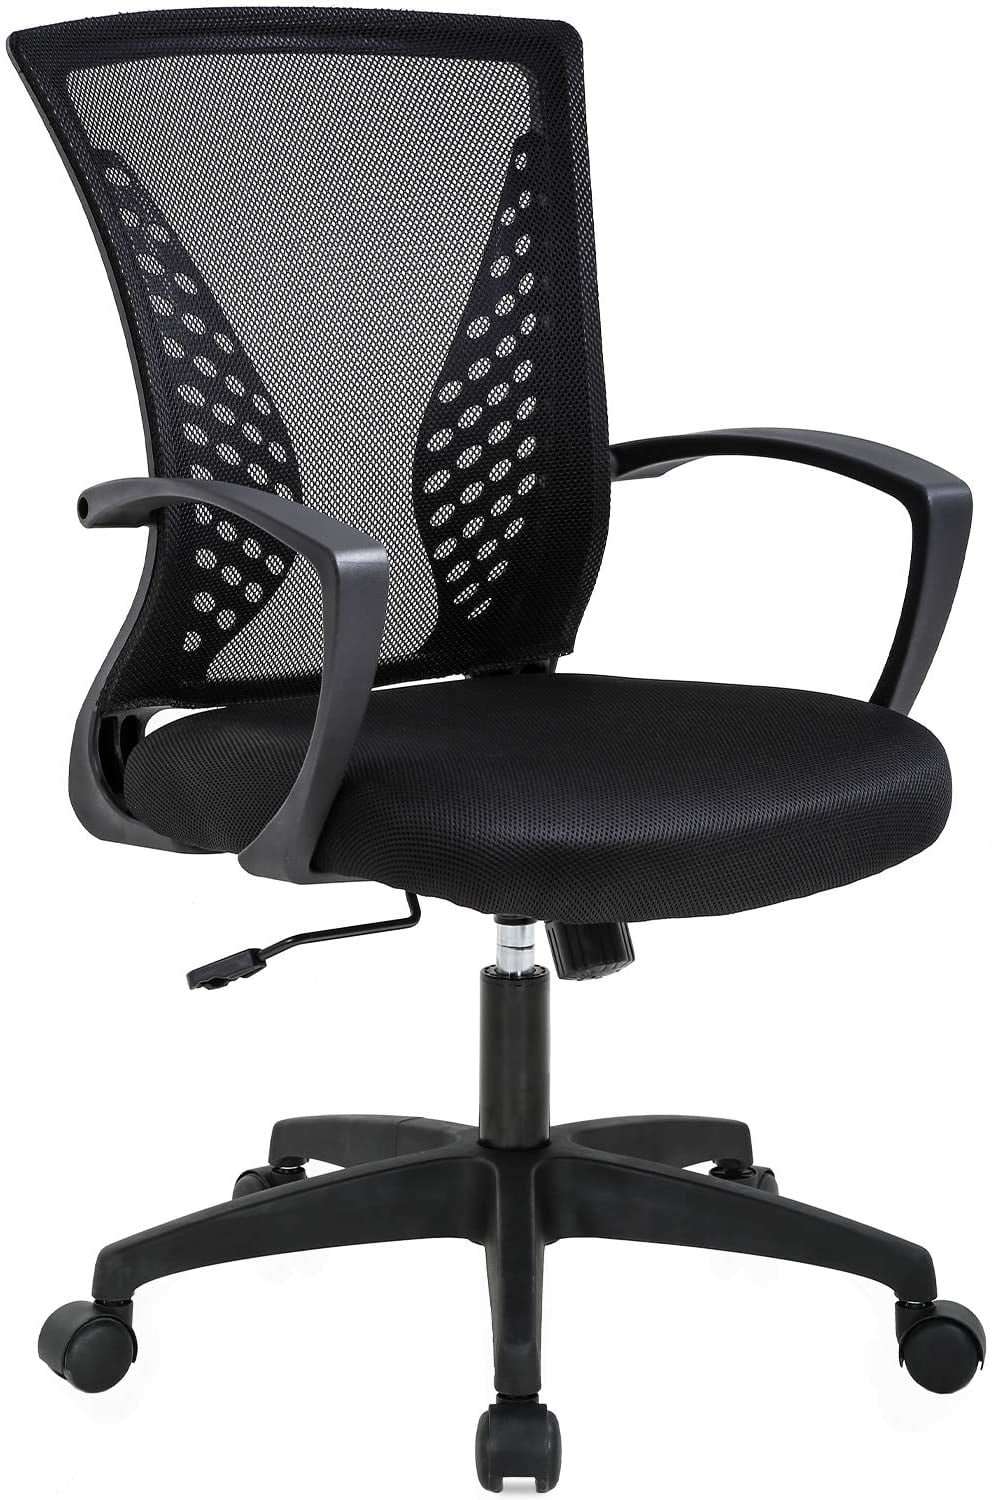 Black Ergonomic Executive Mesh Chair Swivel Mid Back Office Chair Computer Desk 